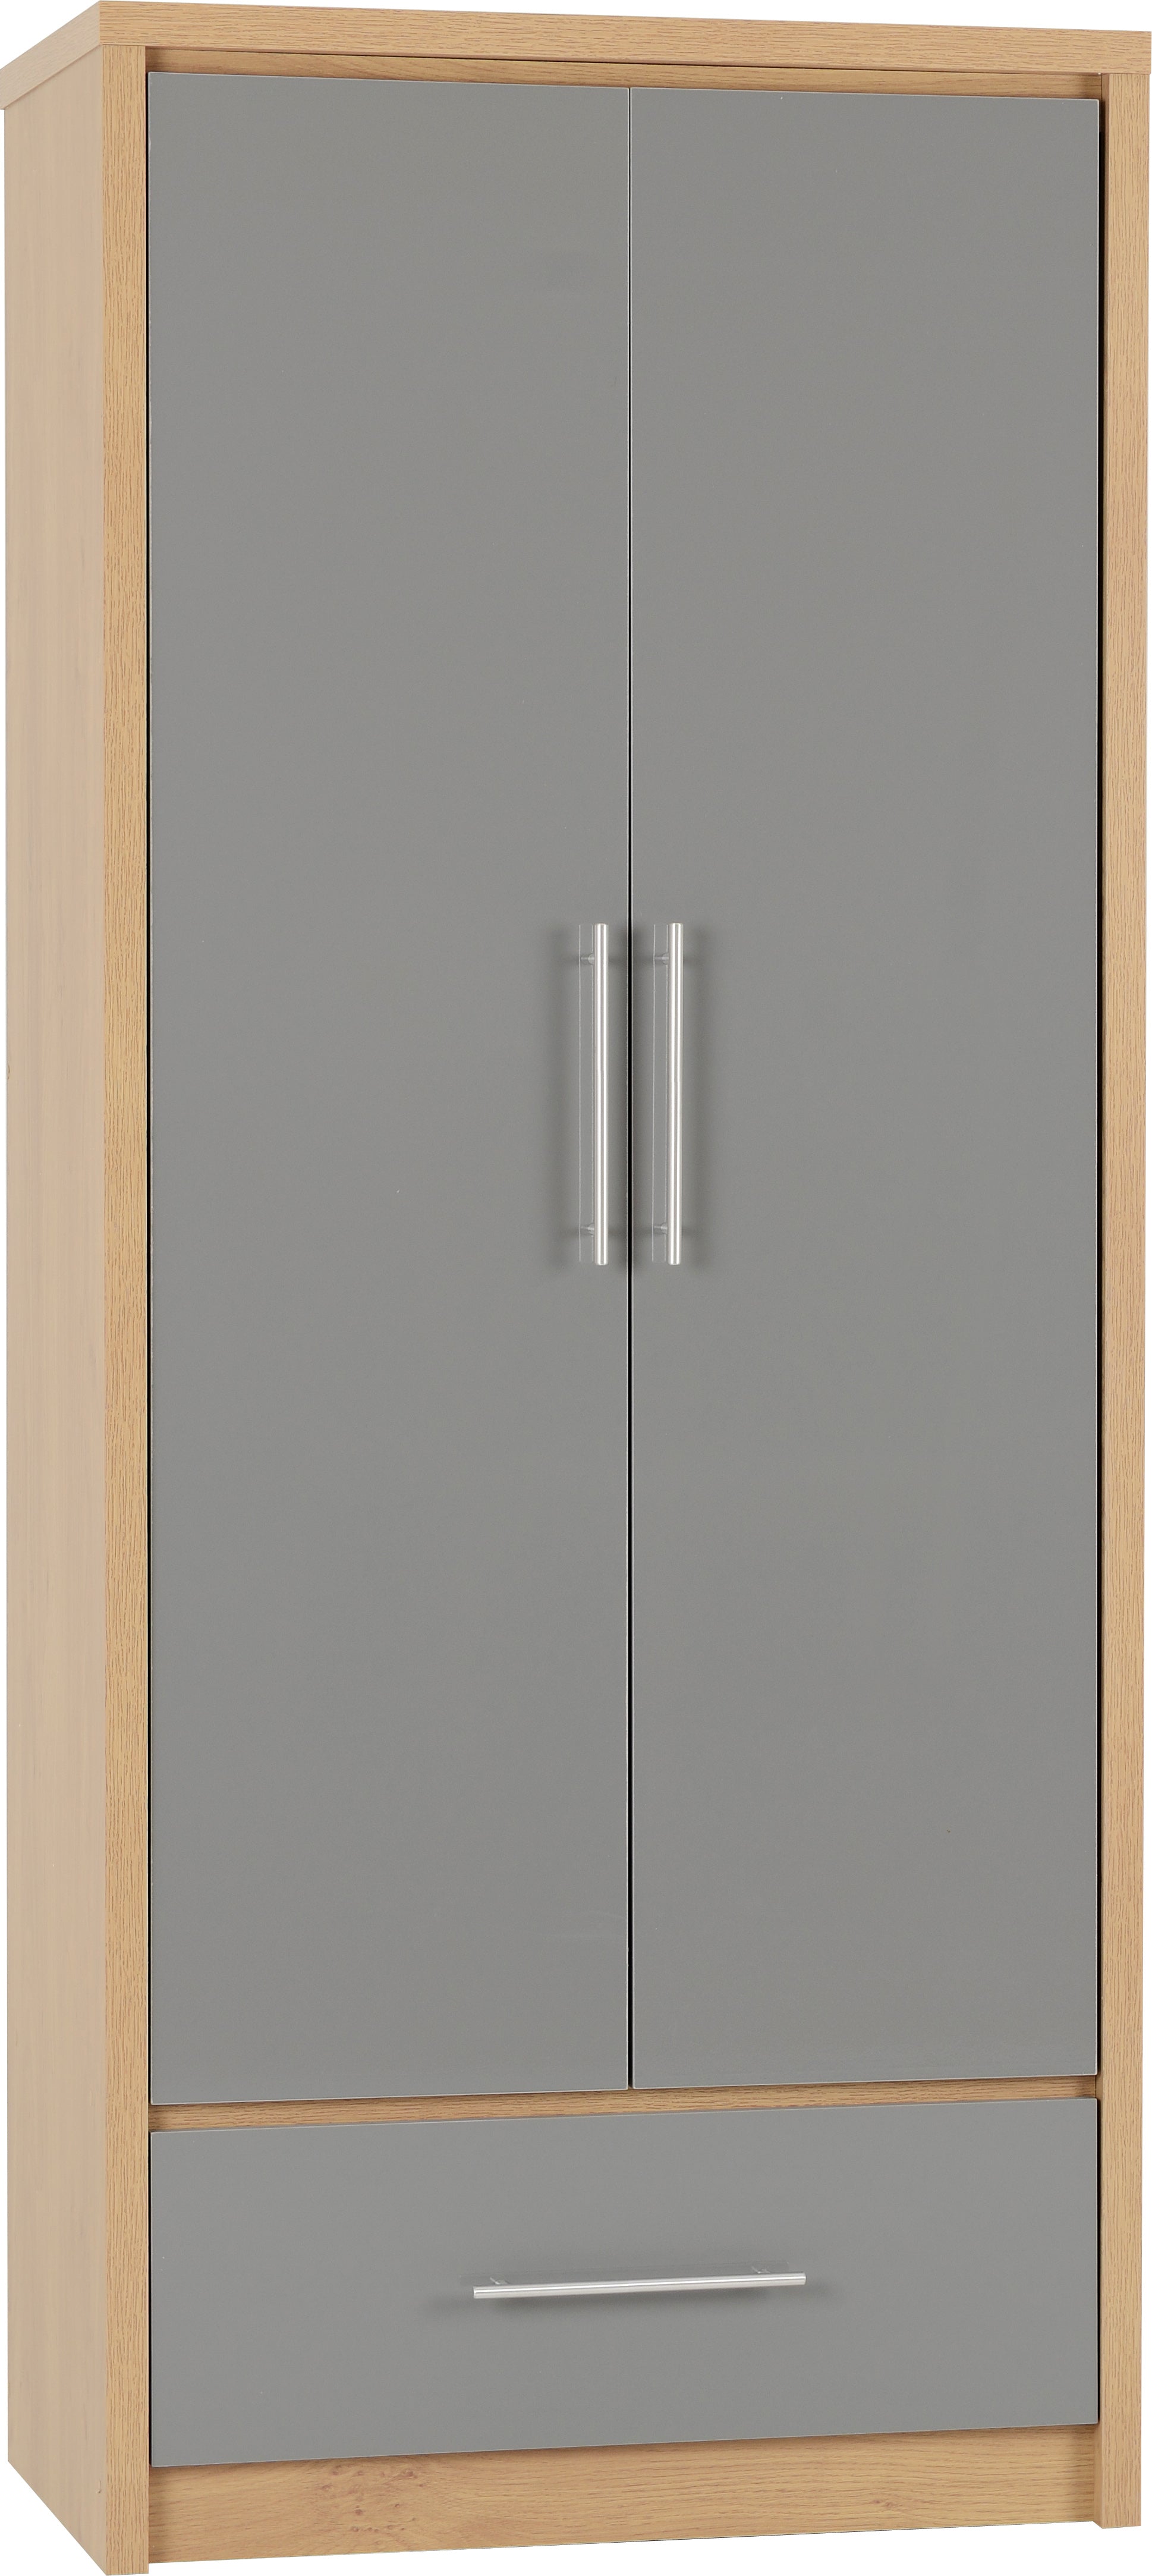 Seville 2 Door 1 Drawer Wardrobe Grey High Gloss/Light Oak Effect Veneer